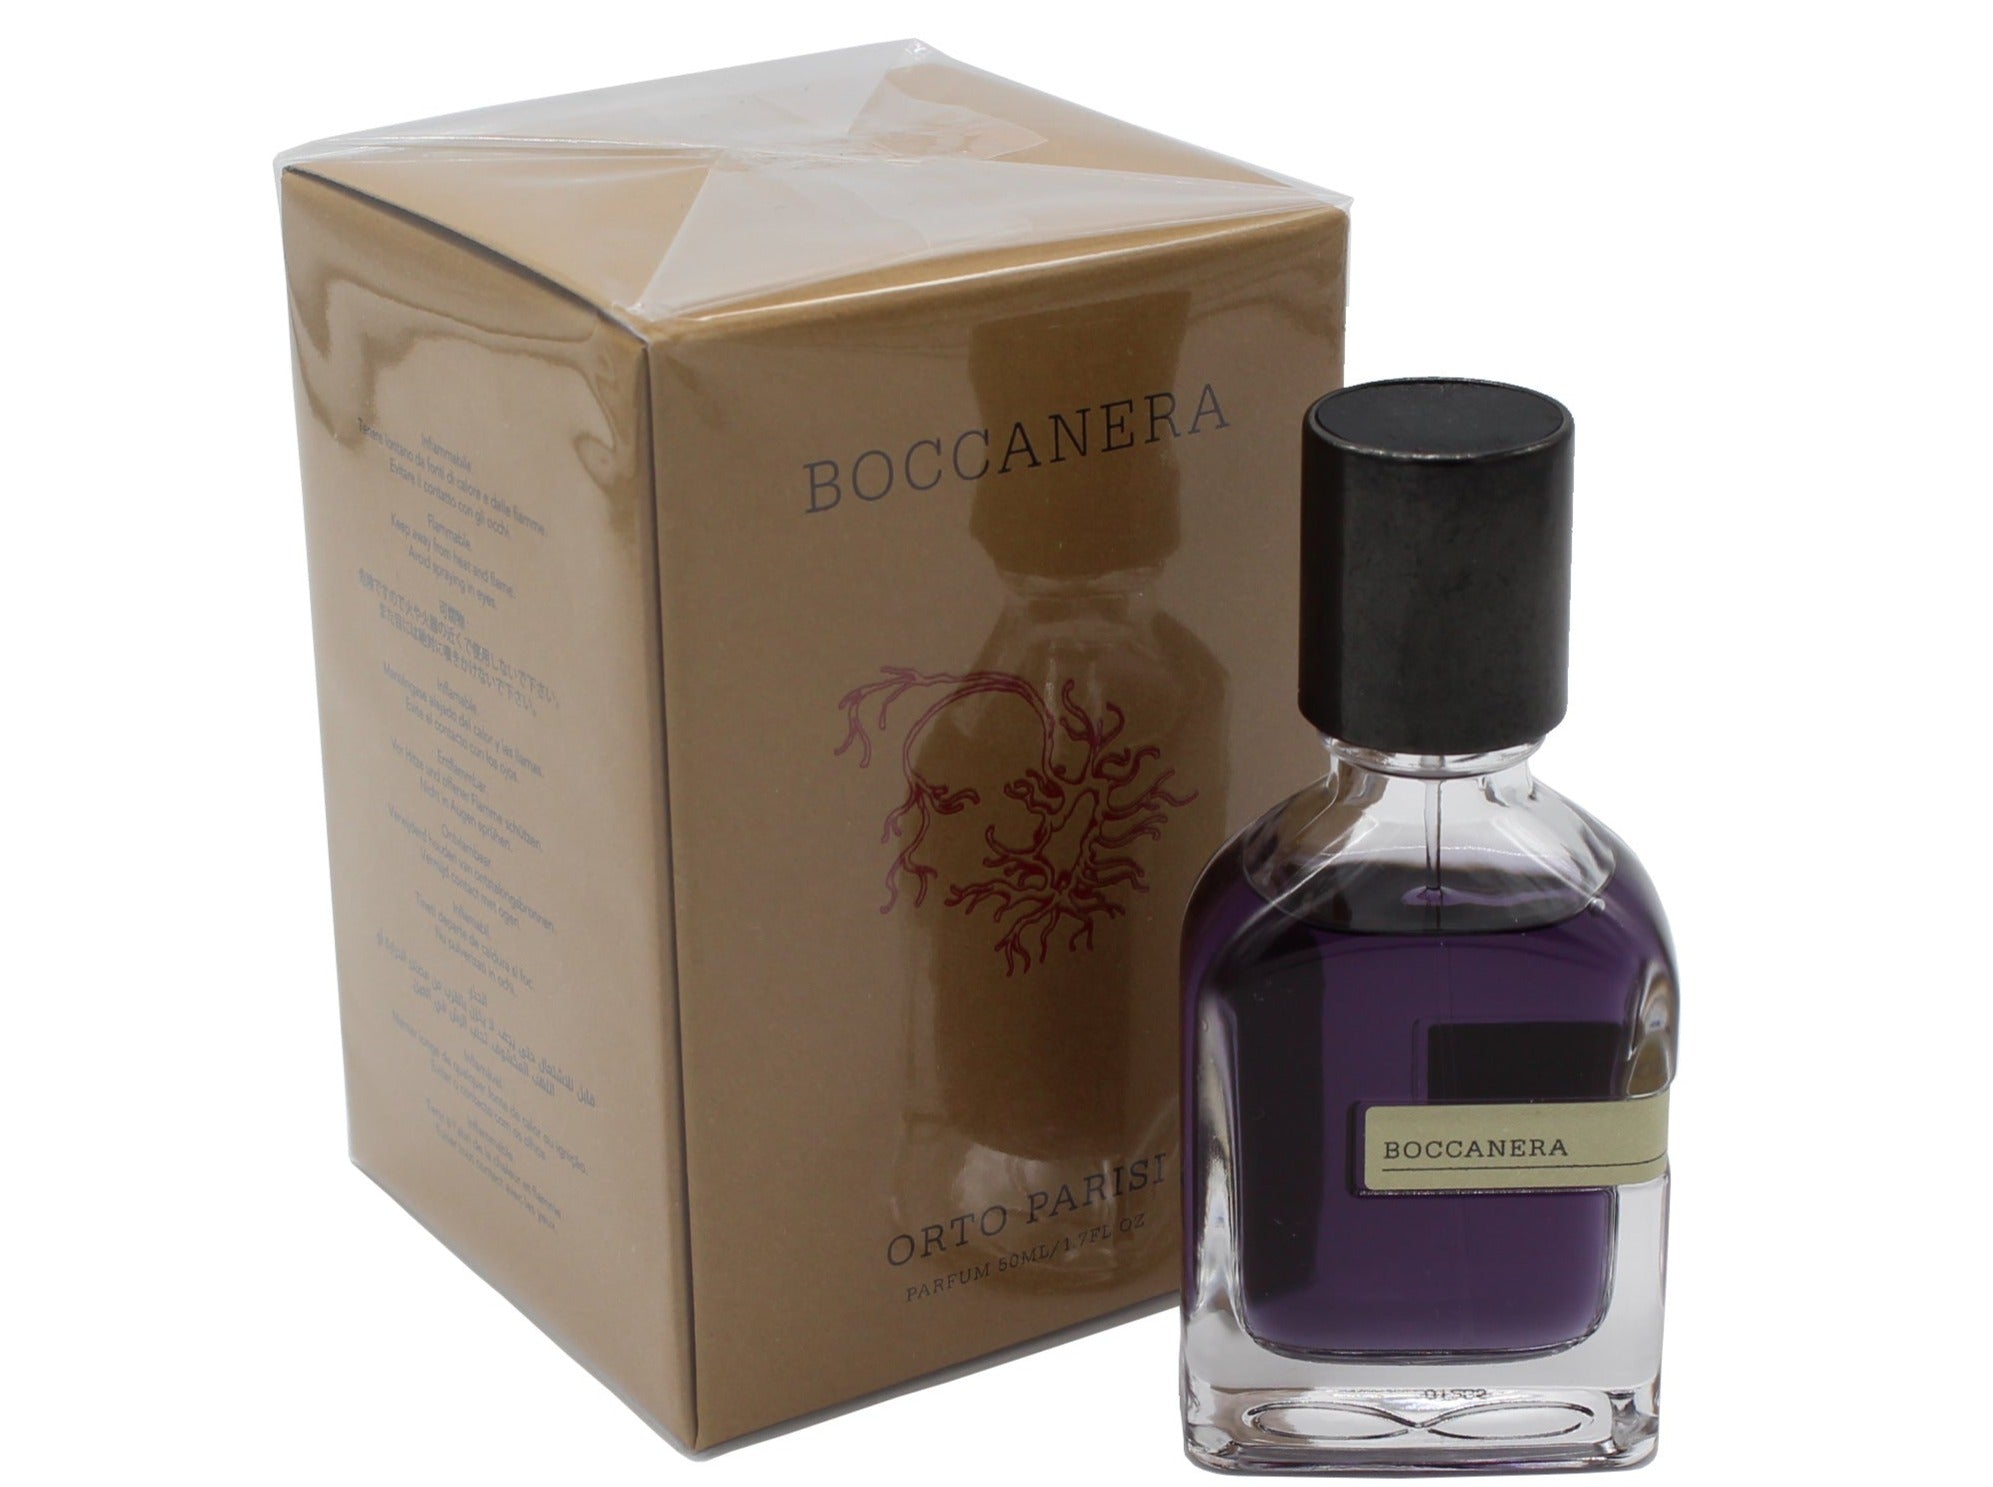 Boccanera perfume